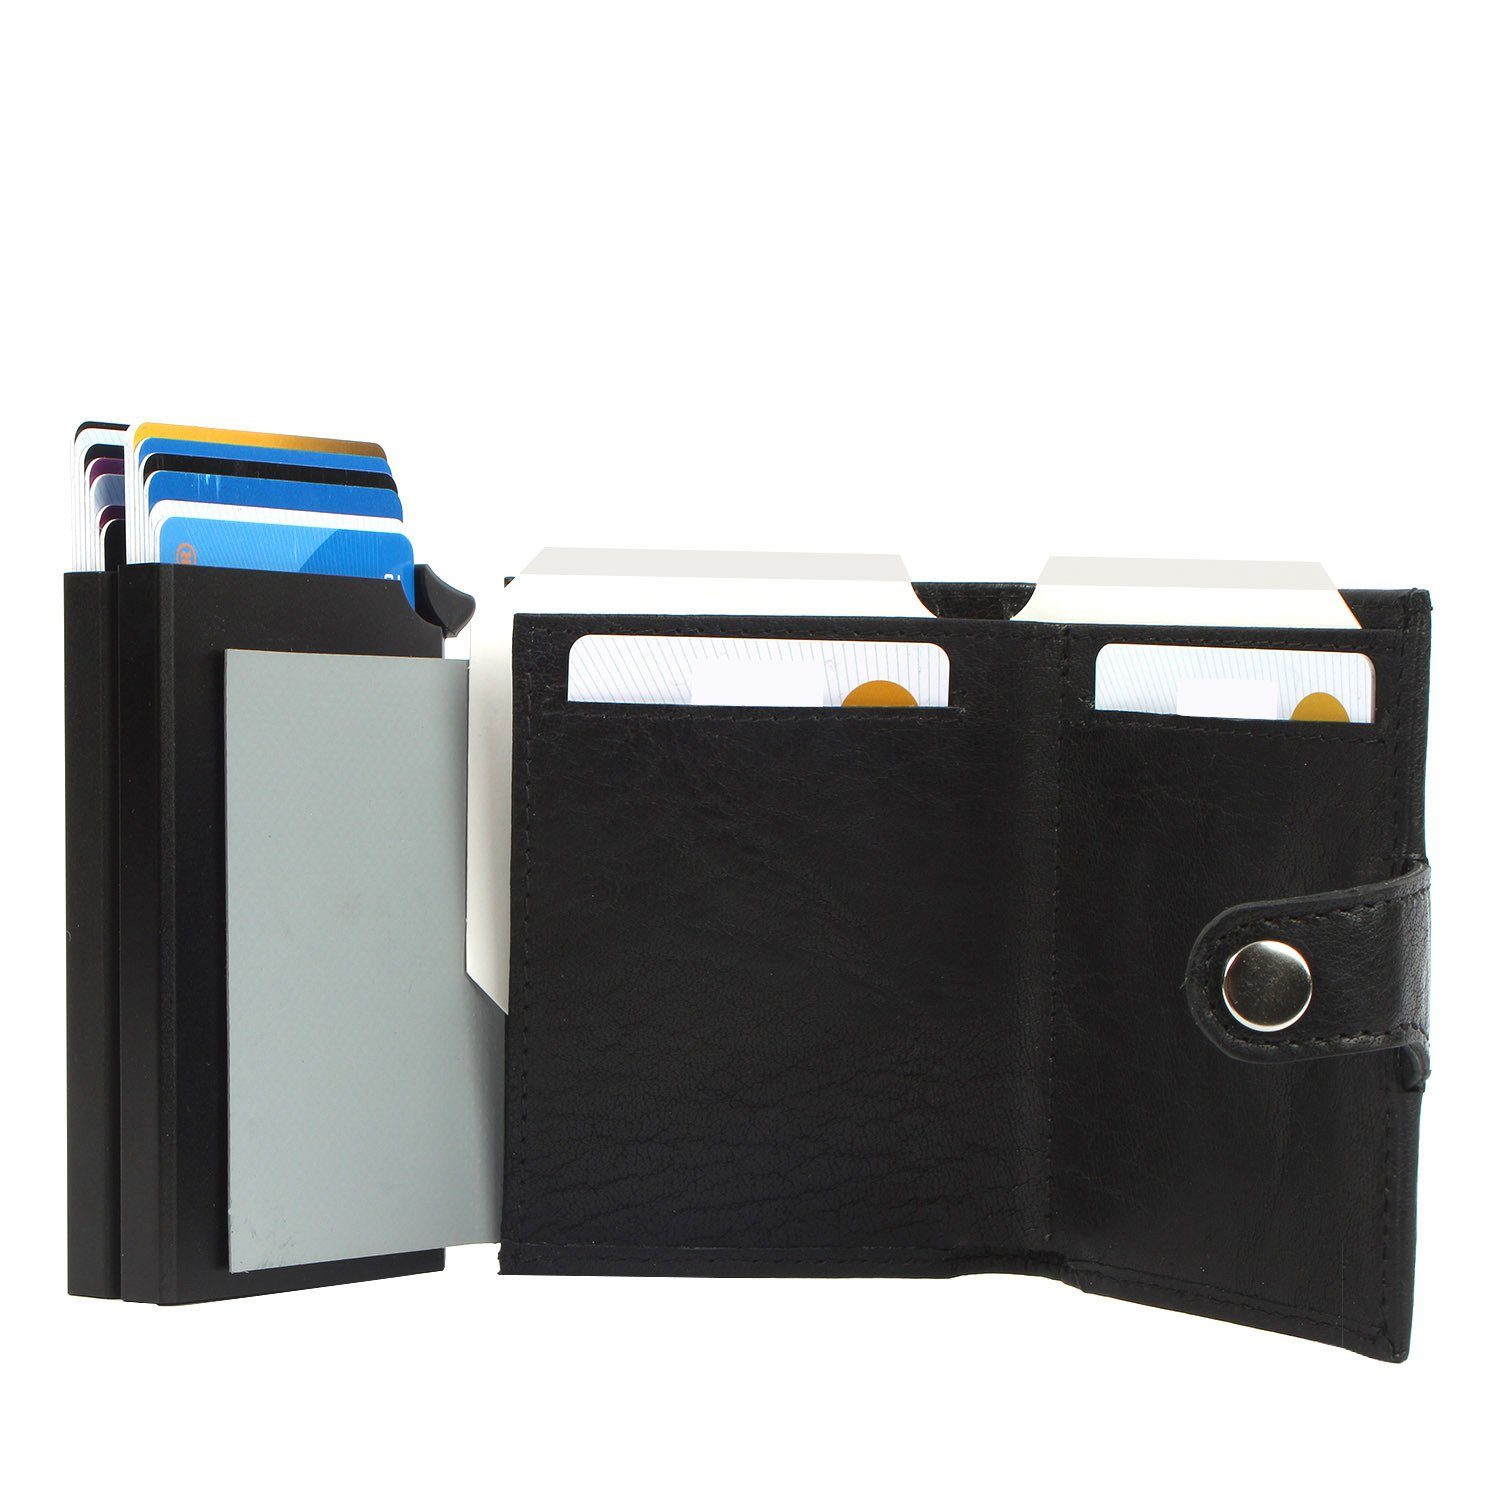 noonyu deepblack Geldbörse Mini aus leather, Upcycling Kreditkartenbörse Leder RFID Margelisch double